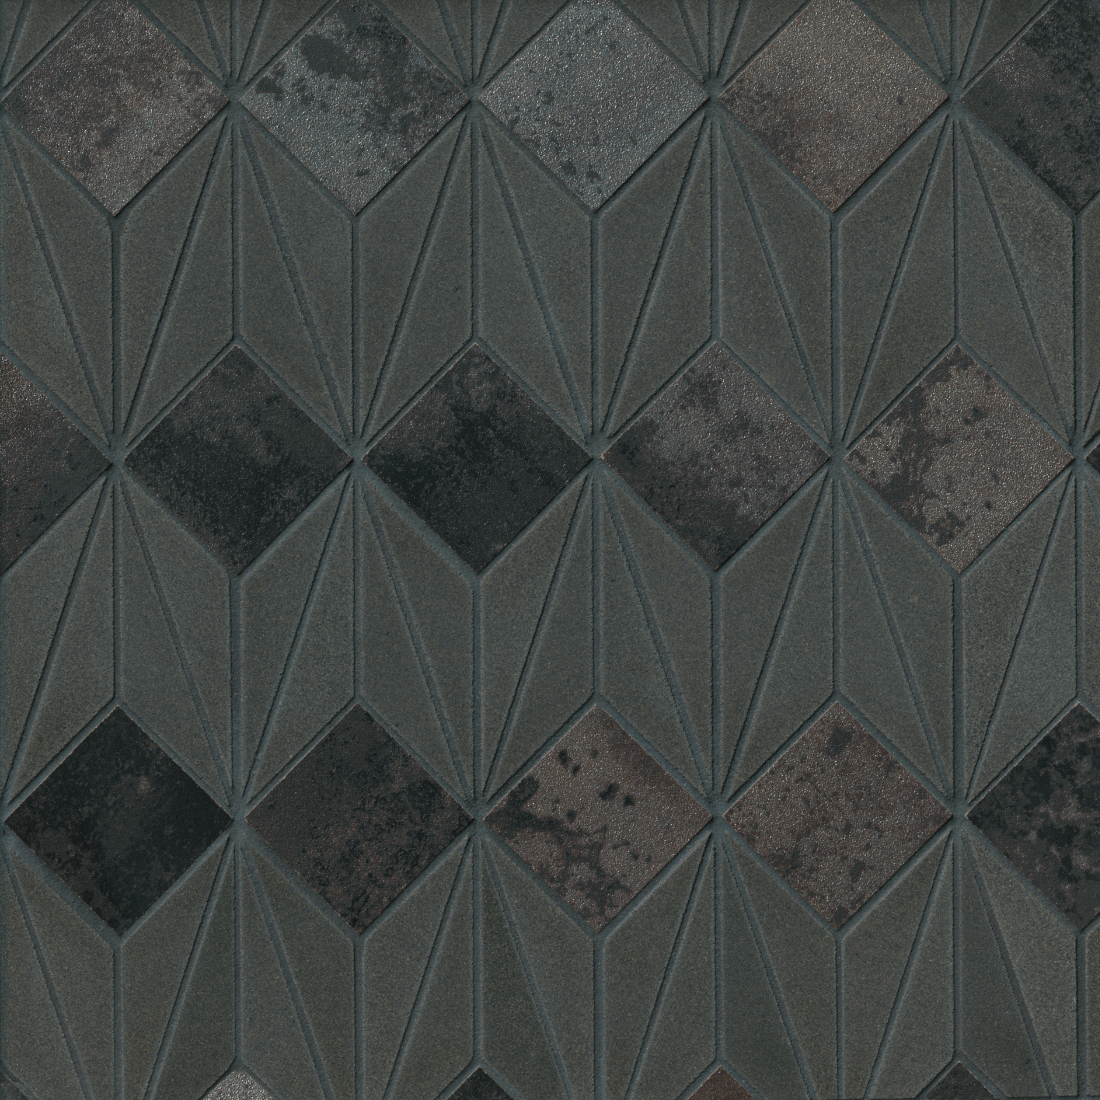 Andesite Starburst Mosaic (SD17-061)